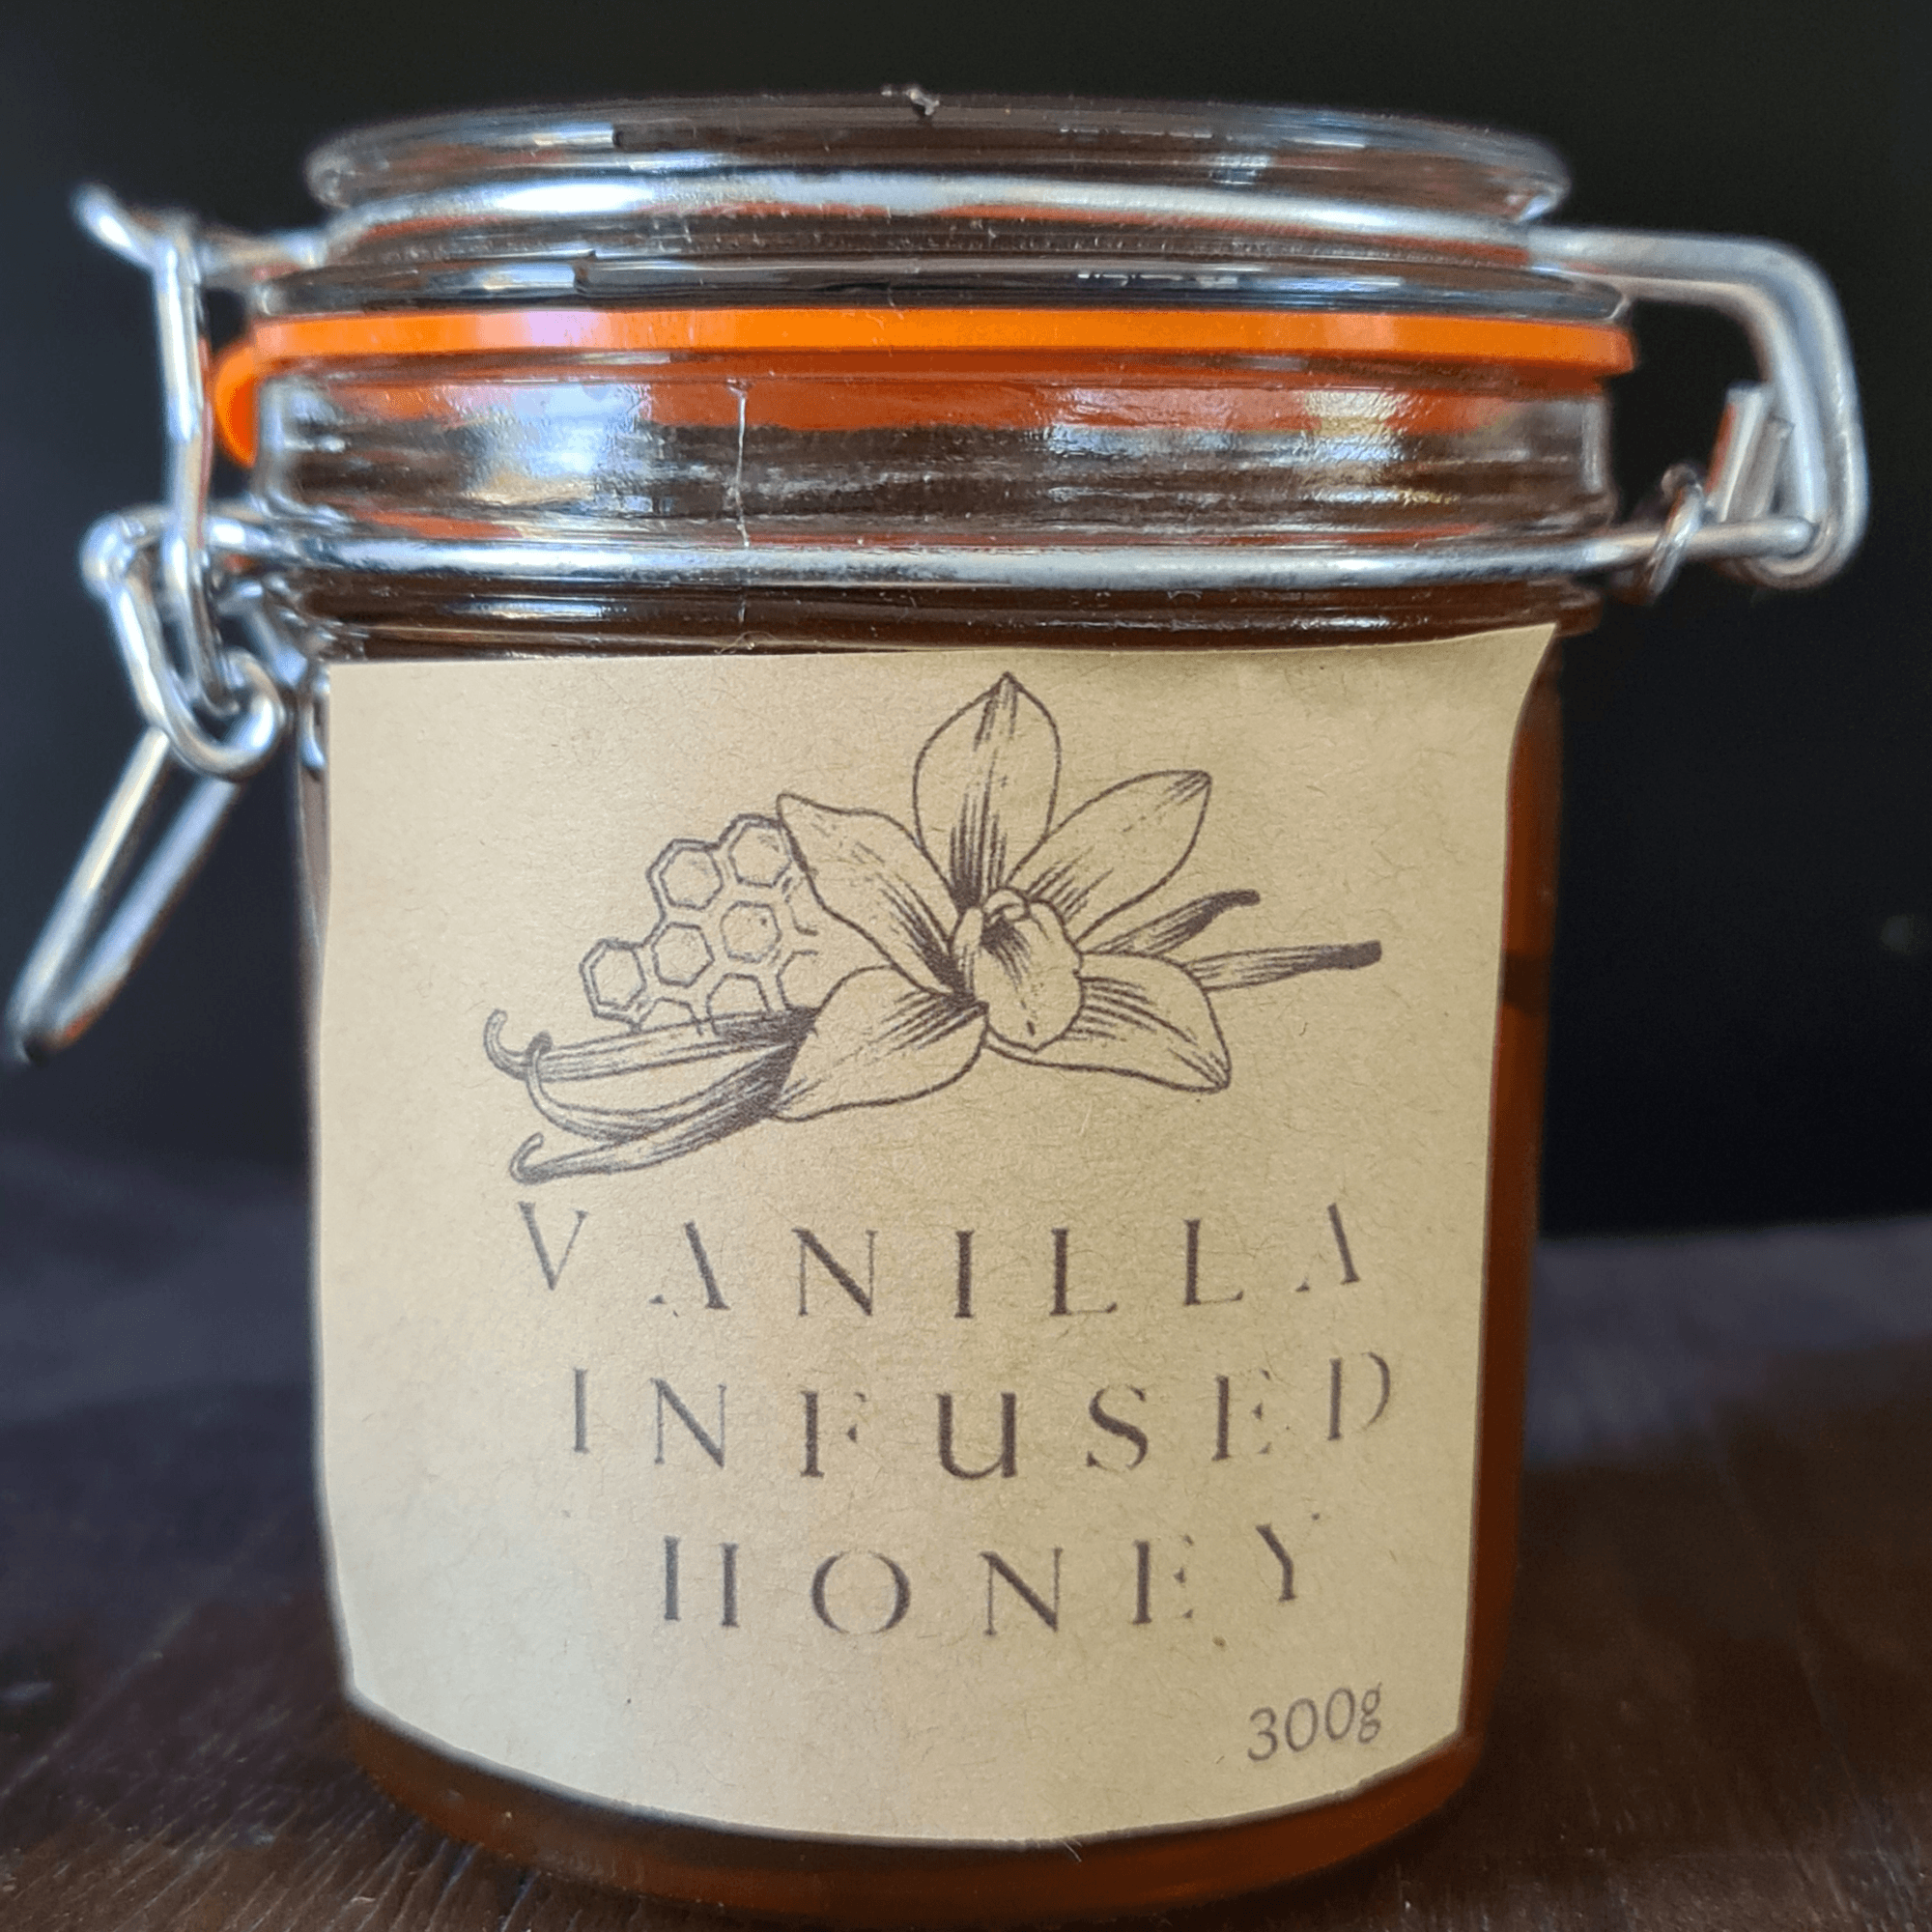 Raw Honey infused with vanillia bean 300g - Rare Dragon Fruit